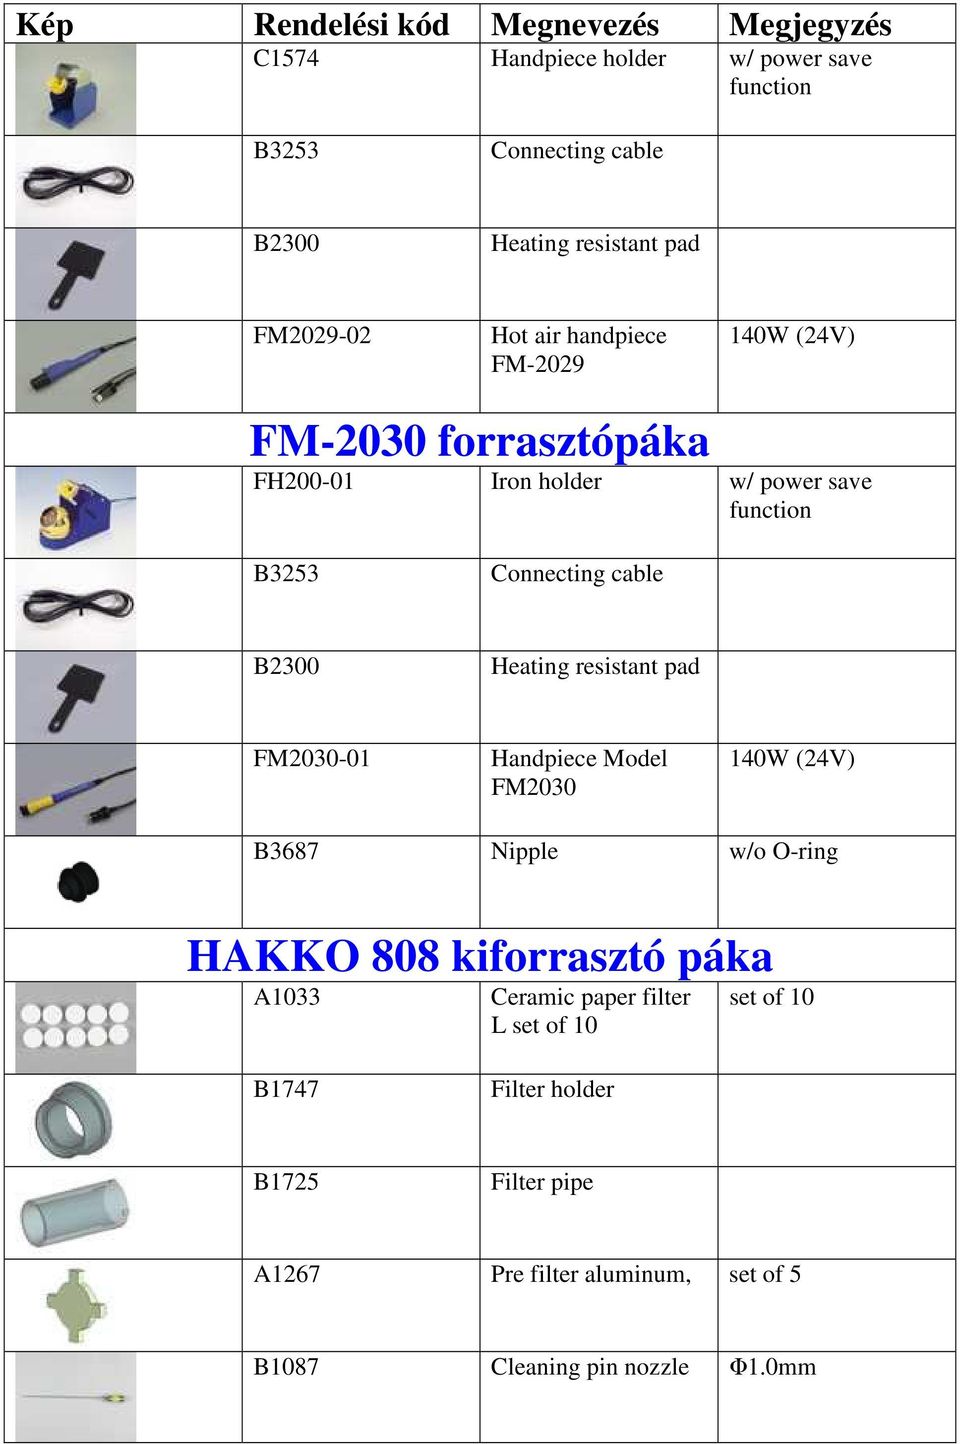 resistant pad FM2030-01 Handpiece Model FM2030 140W (24V) B3687 Nipple w/o O-ring HAKKO 808 kiforrasztó páka A1033 Ceramic